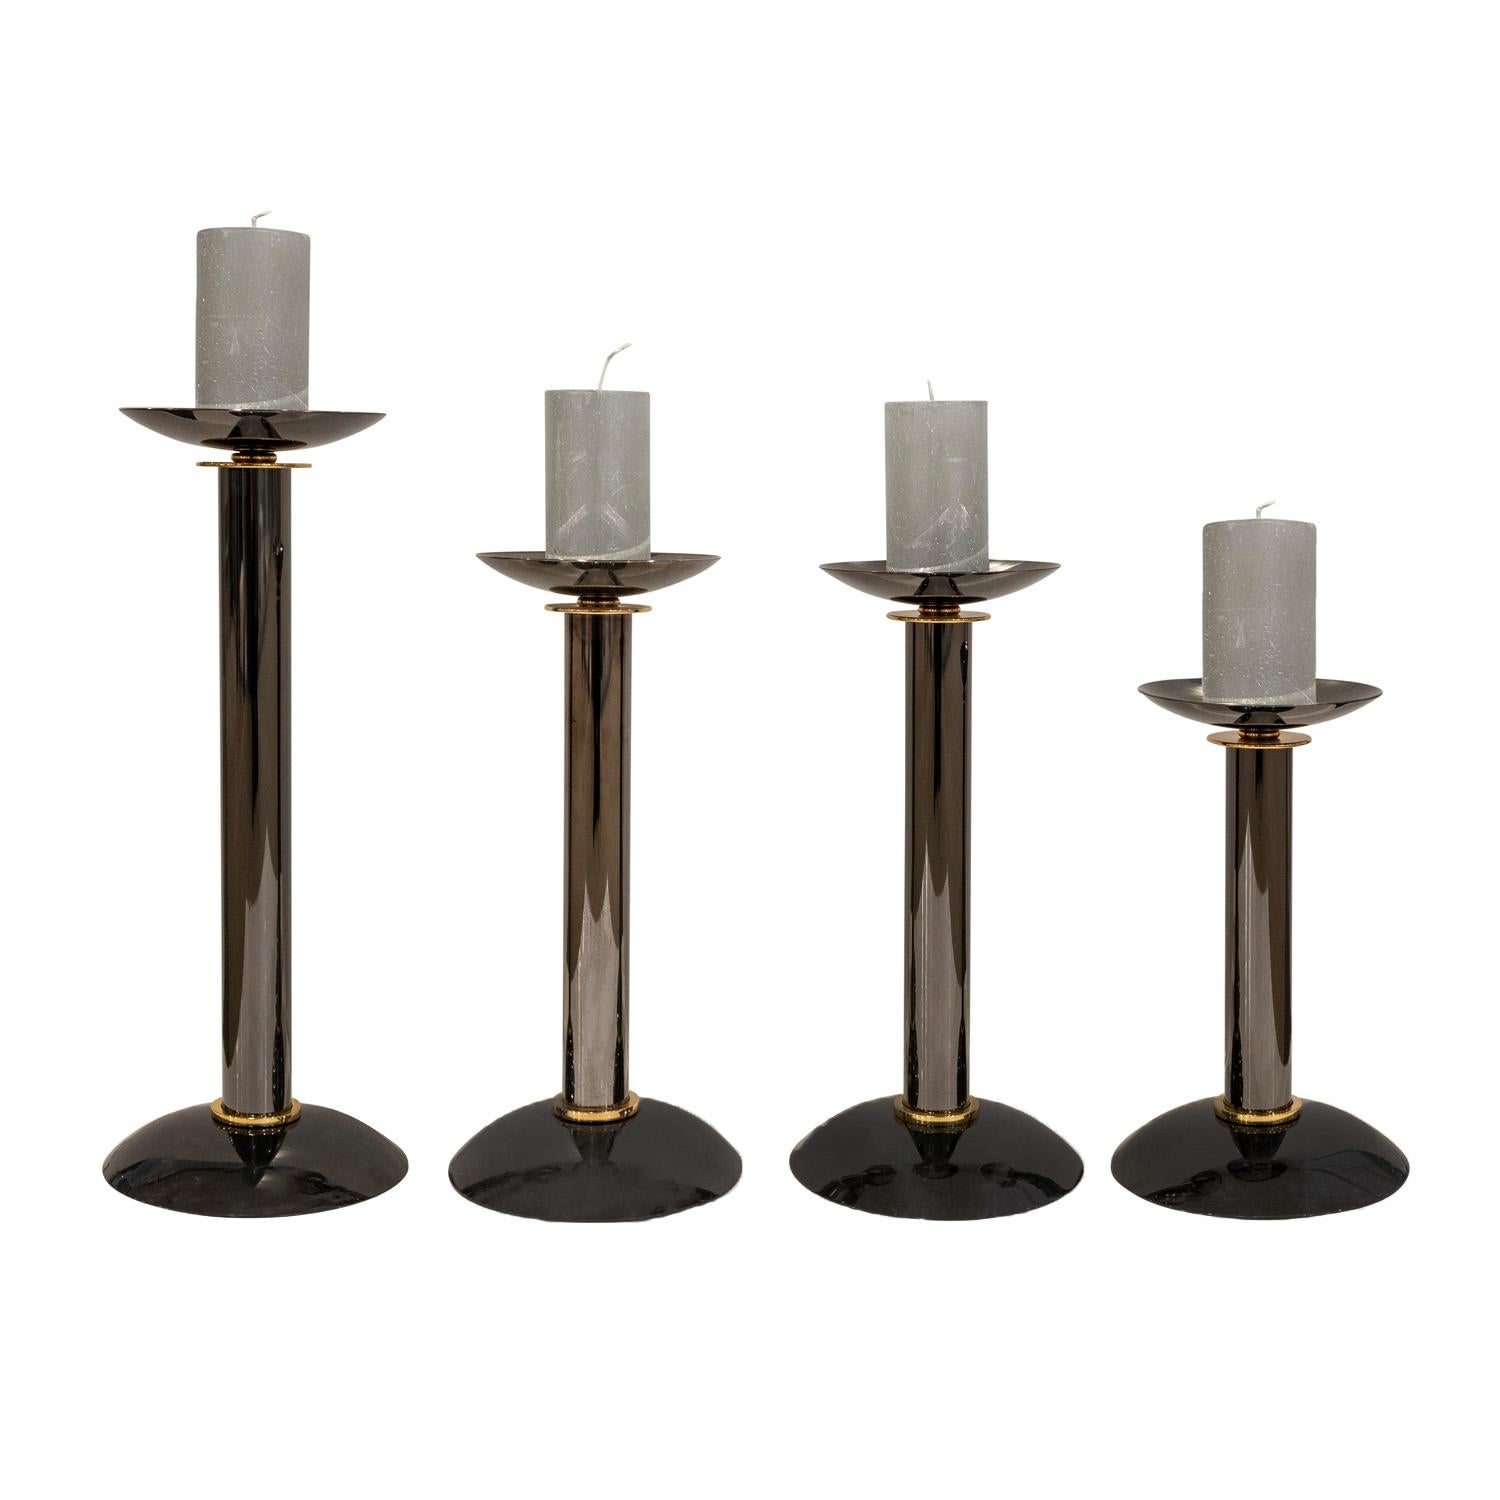 Modern Karl Springer Set of 4 Candleholders in Gunmetal and Brass, 1980s For Sale